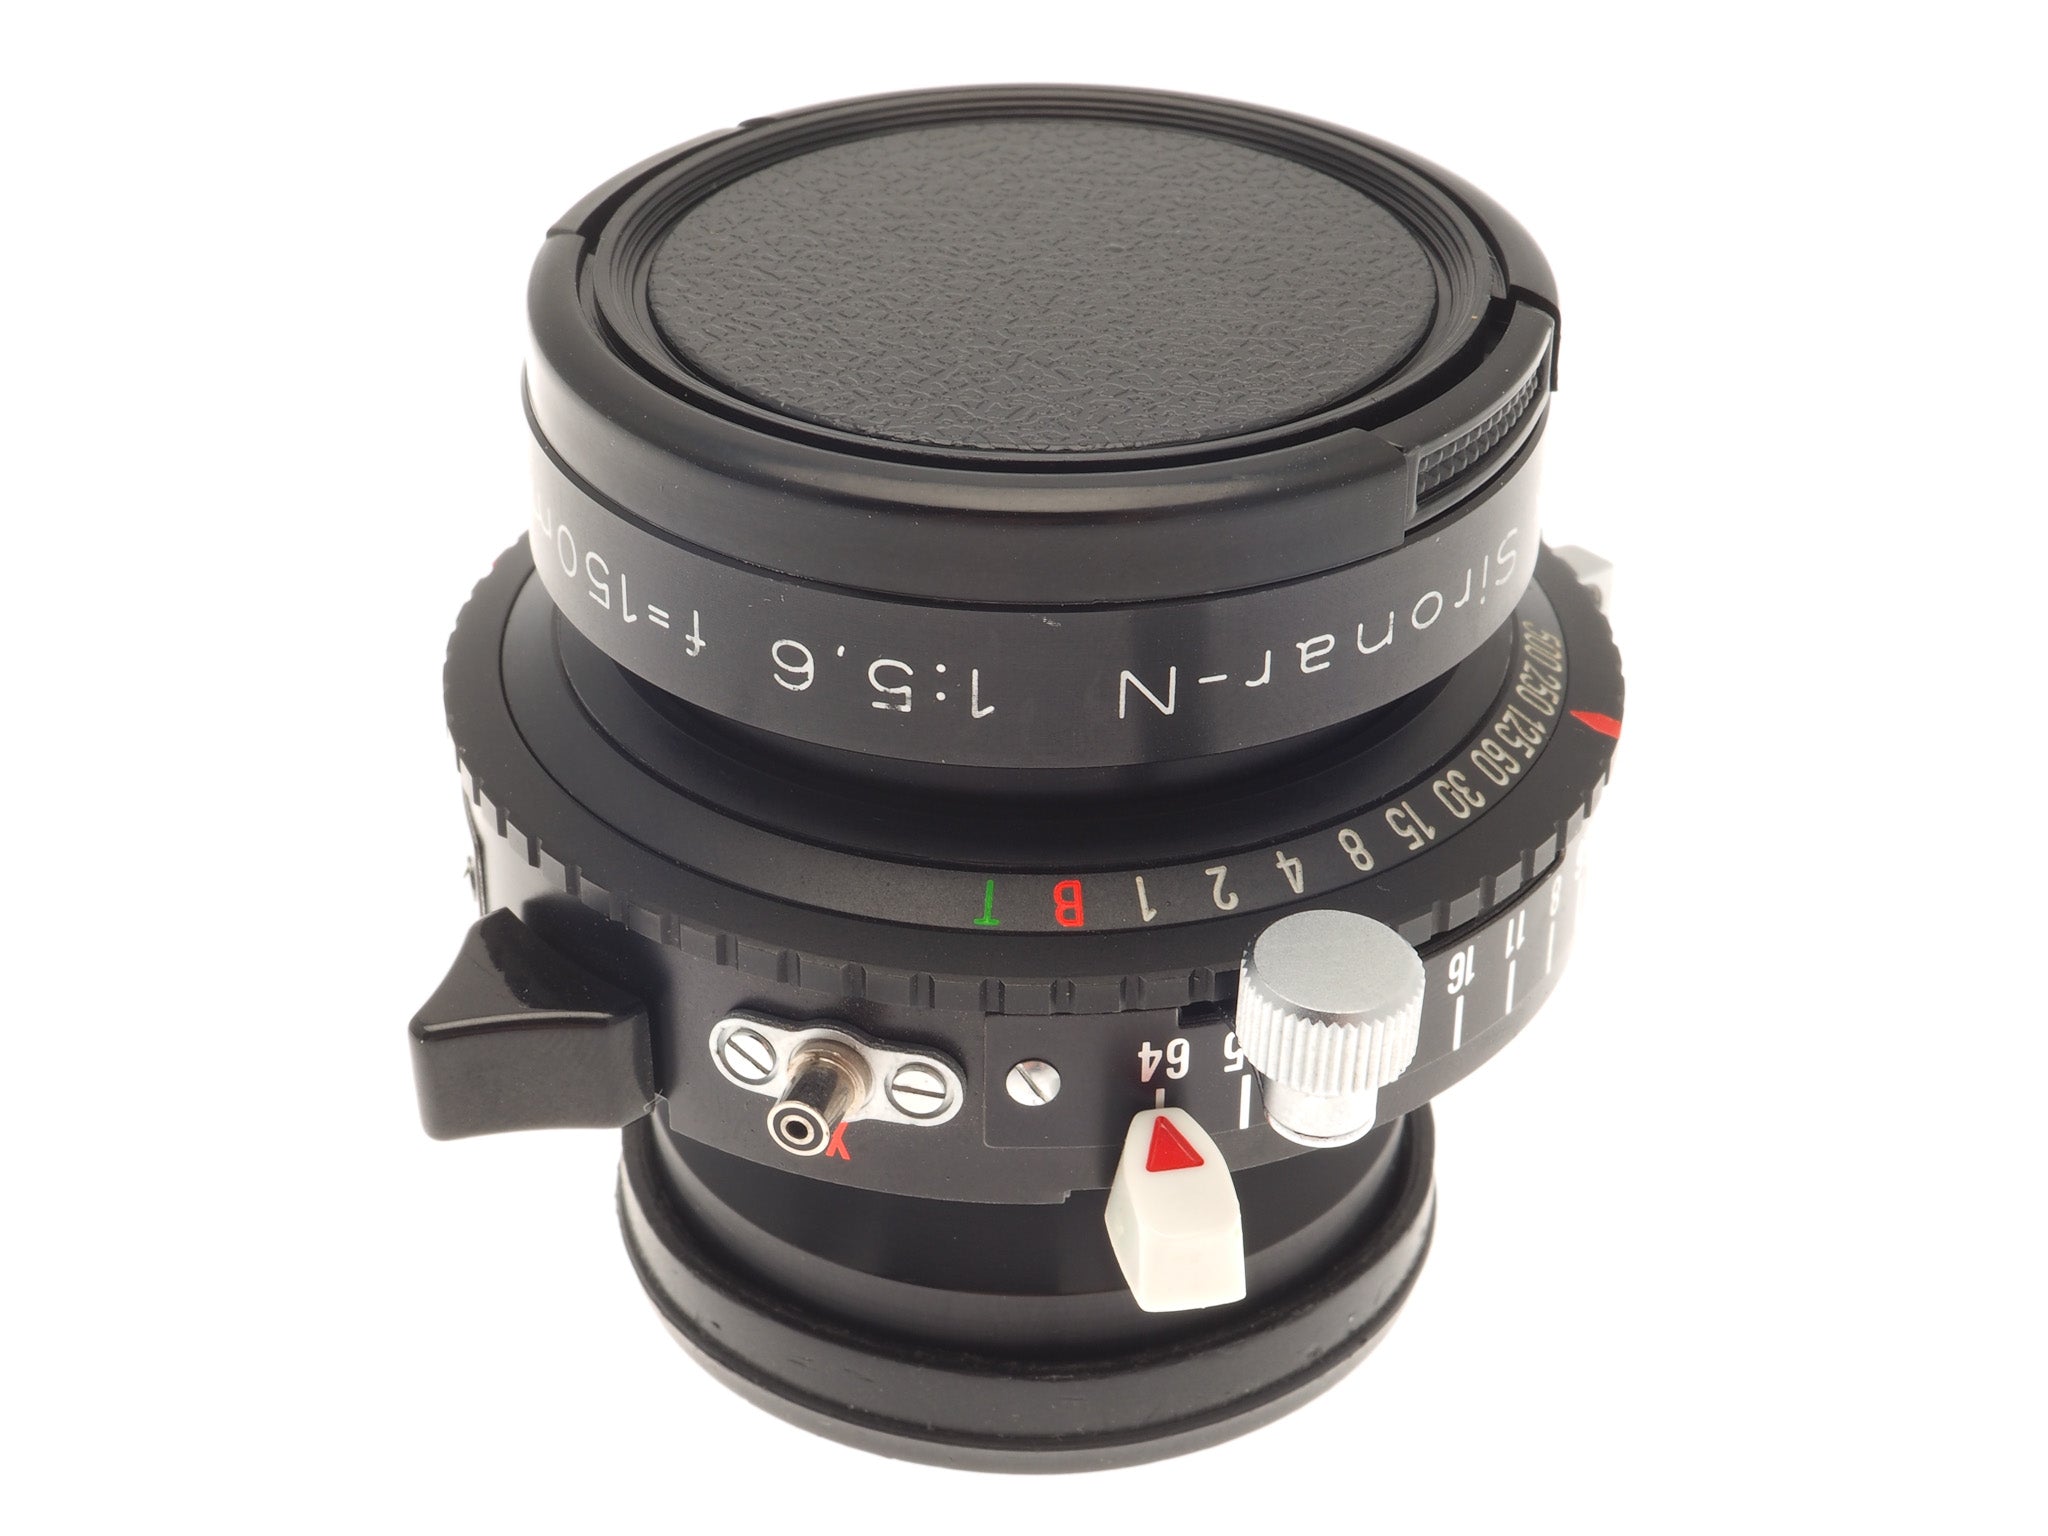 Rodenstock 150mm f5.6 Sironar-N/Sinaron-S MC (Shutter) - Lens